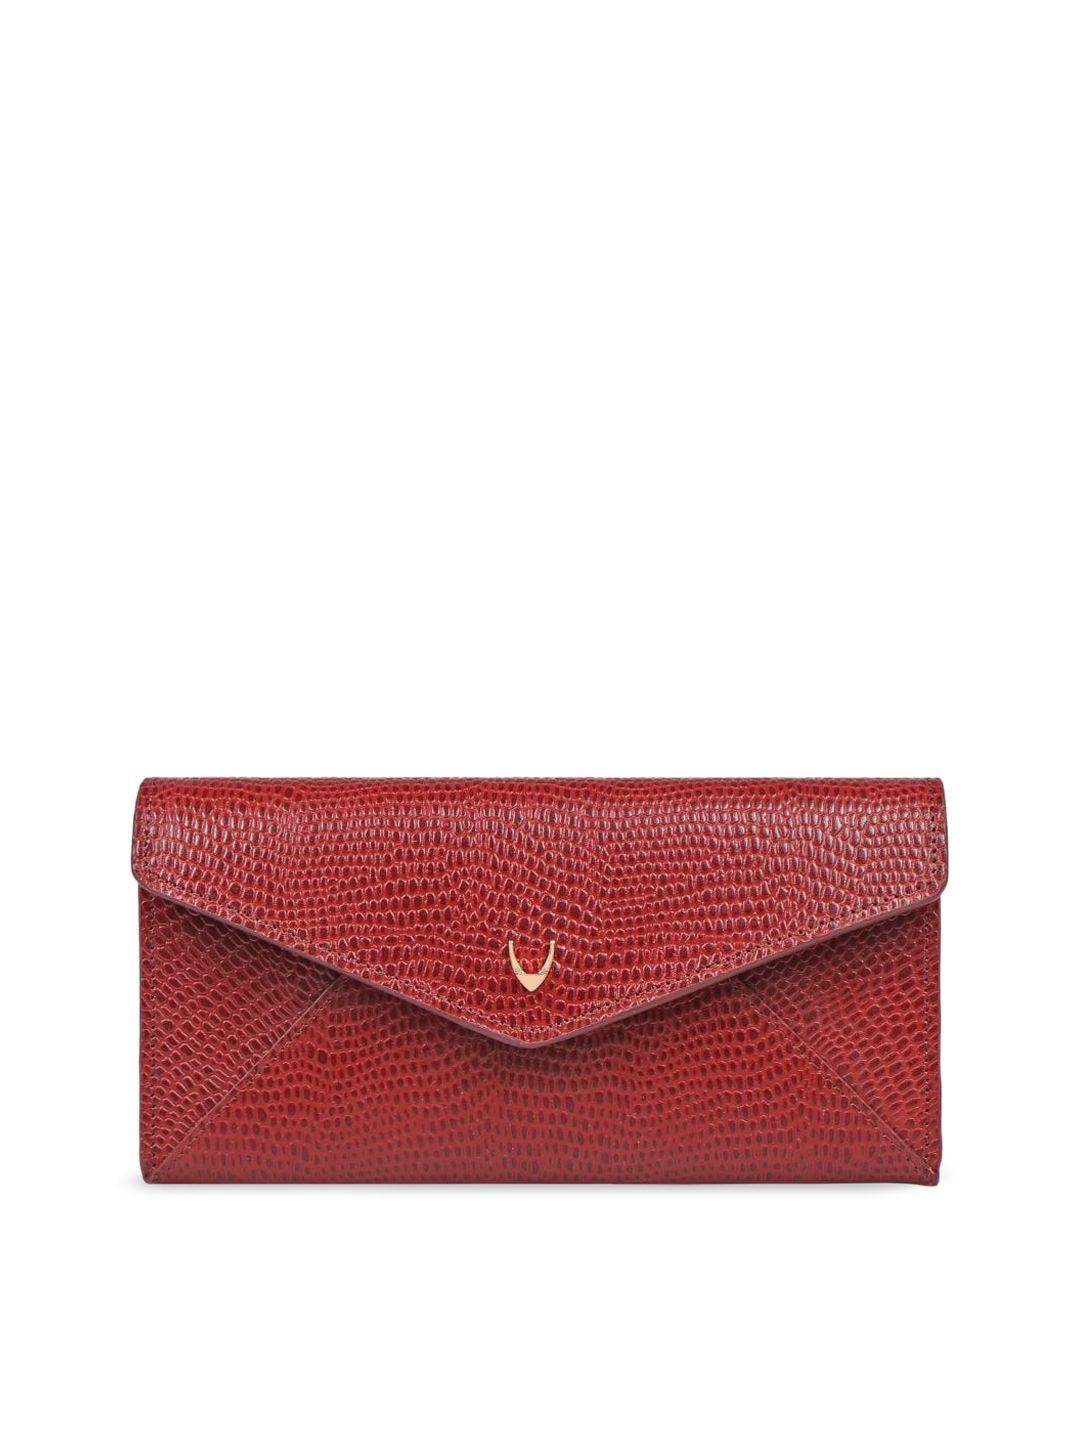 hidesign red textured envelope clutch